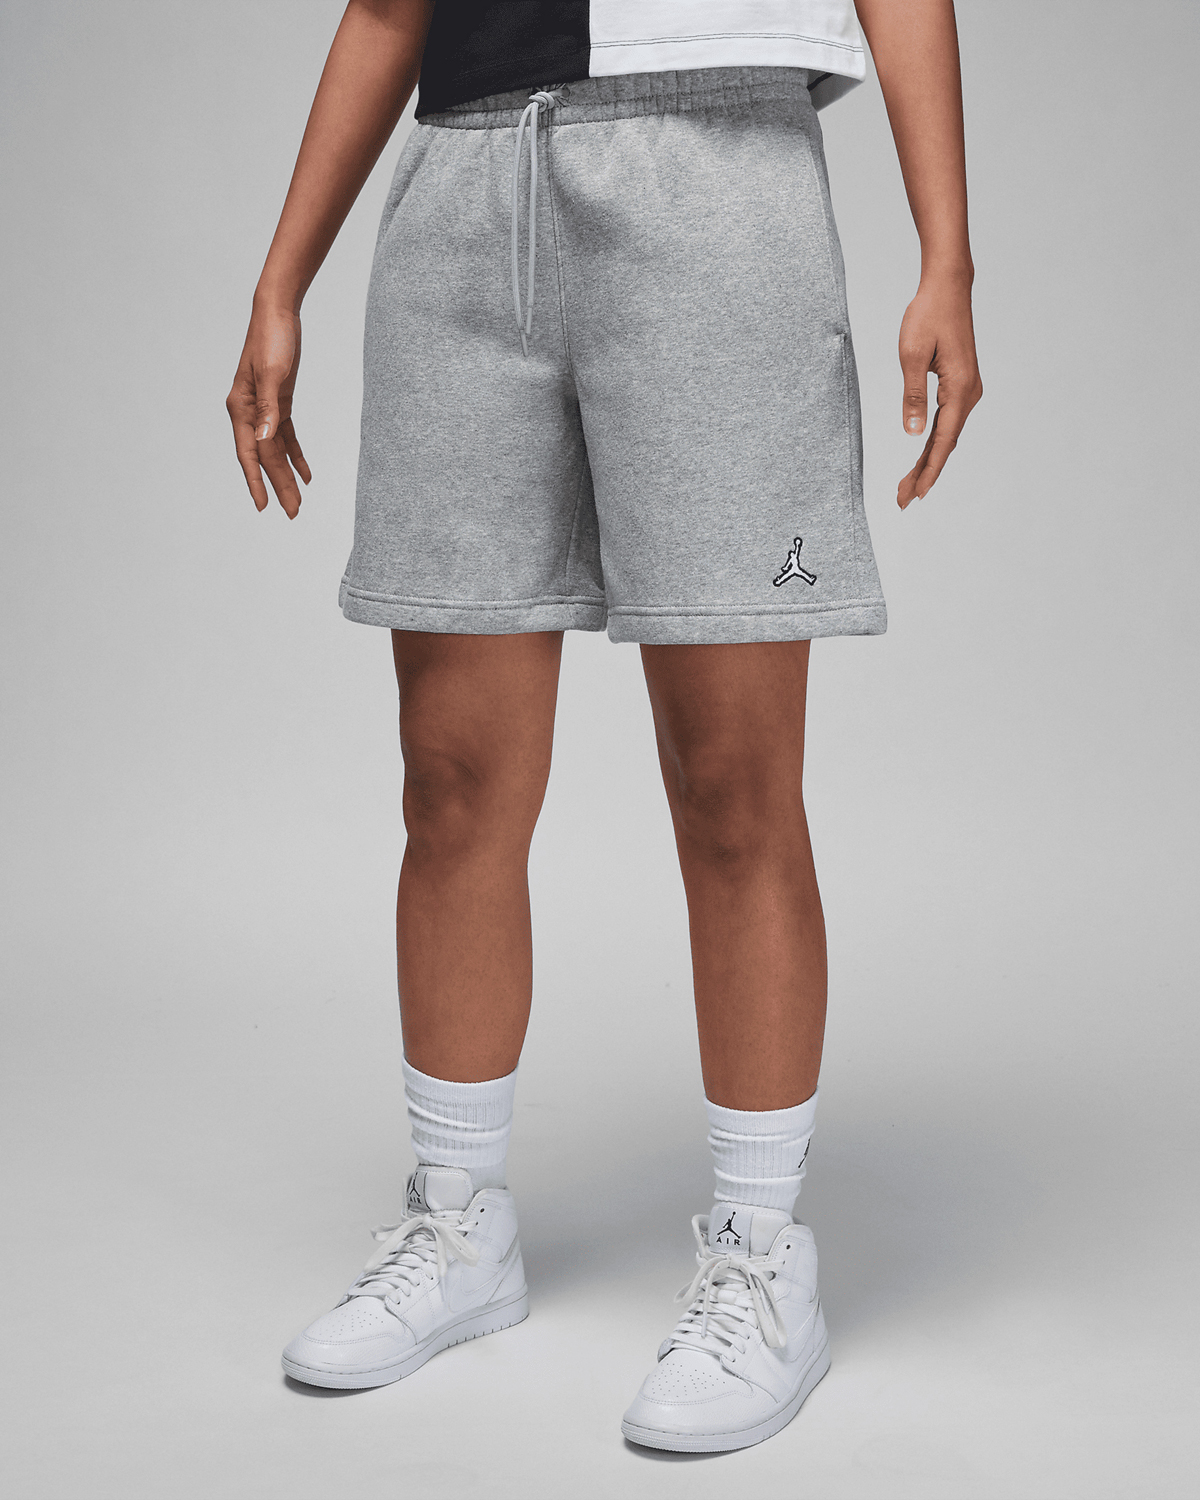 Jordan-Brooklyn-Fleece-Womens-Shorts-Grey